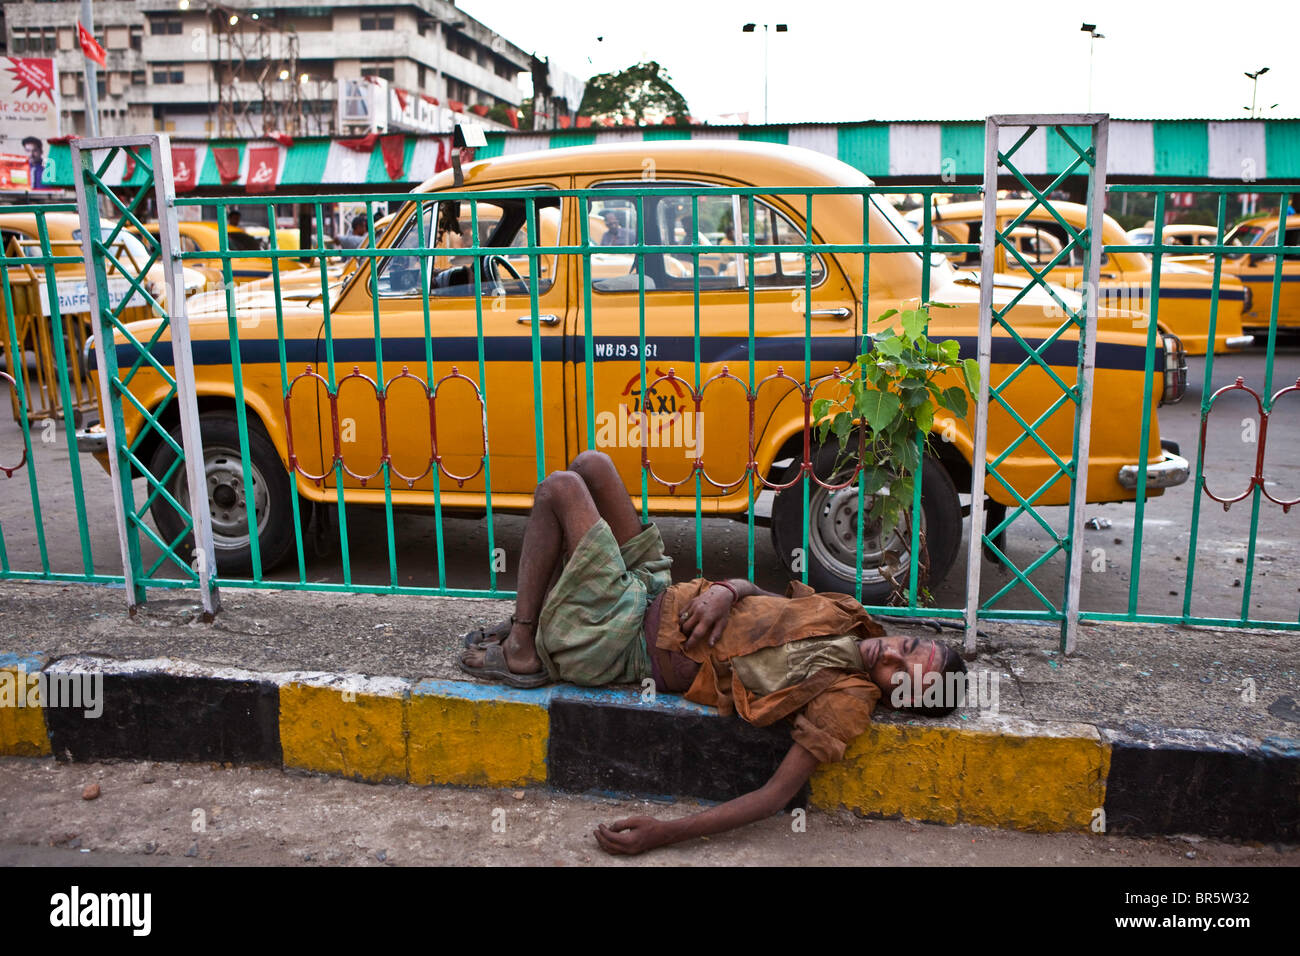 A homeless man lies asleep on the pavement outside the busy Kolkata train station. Stock Photo